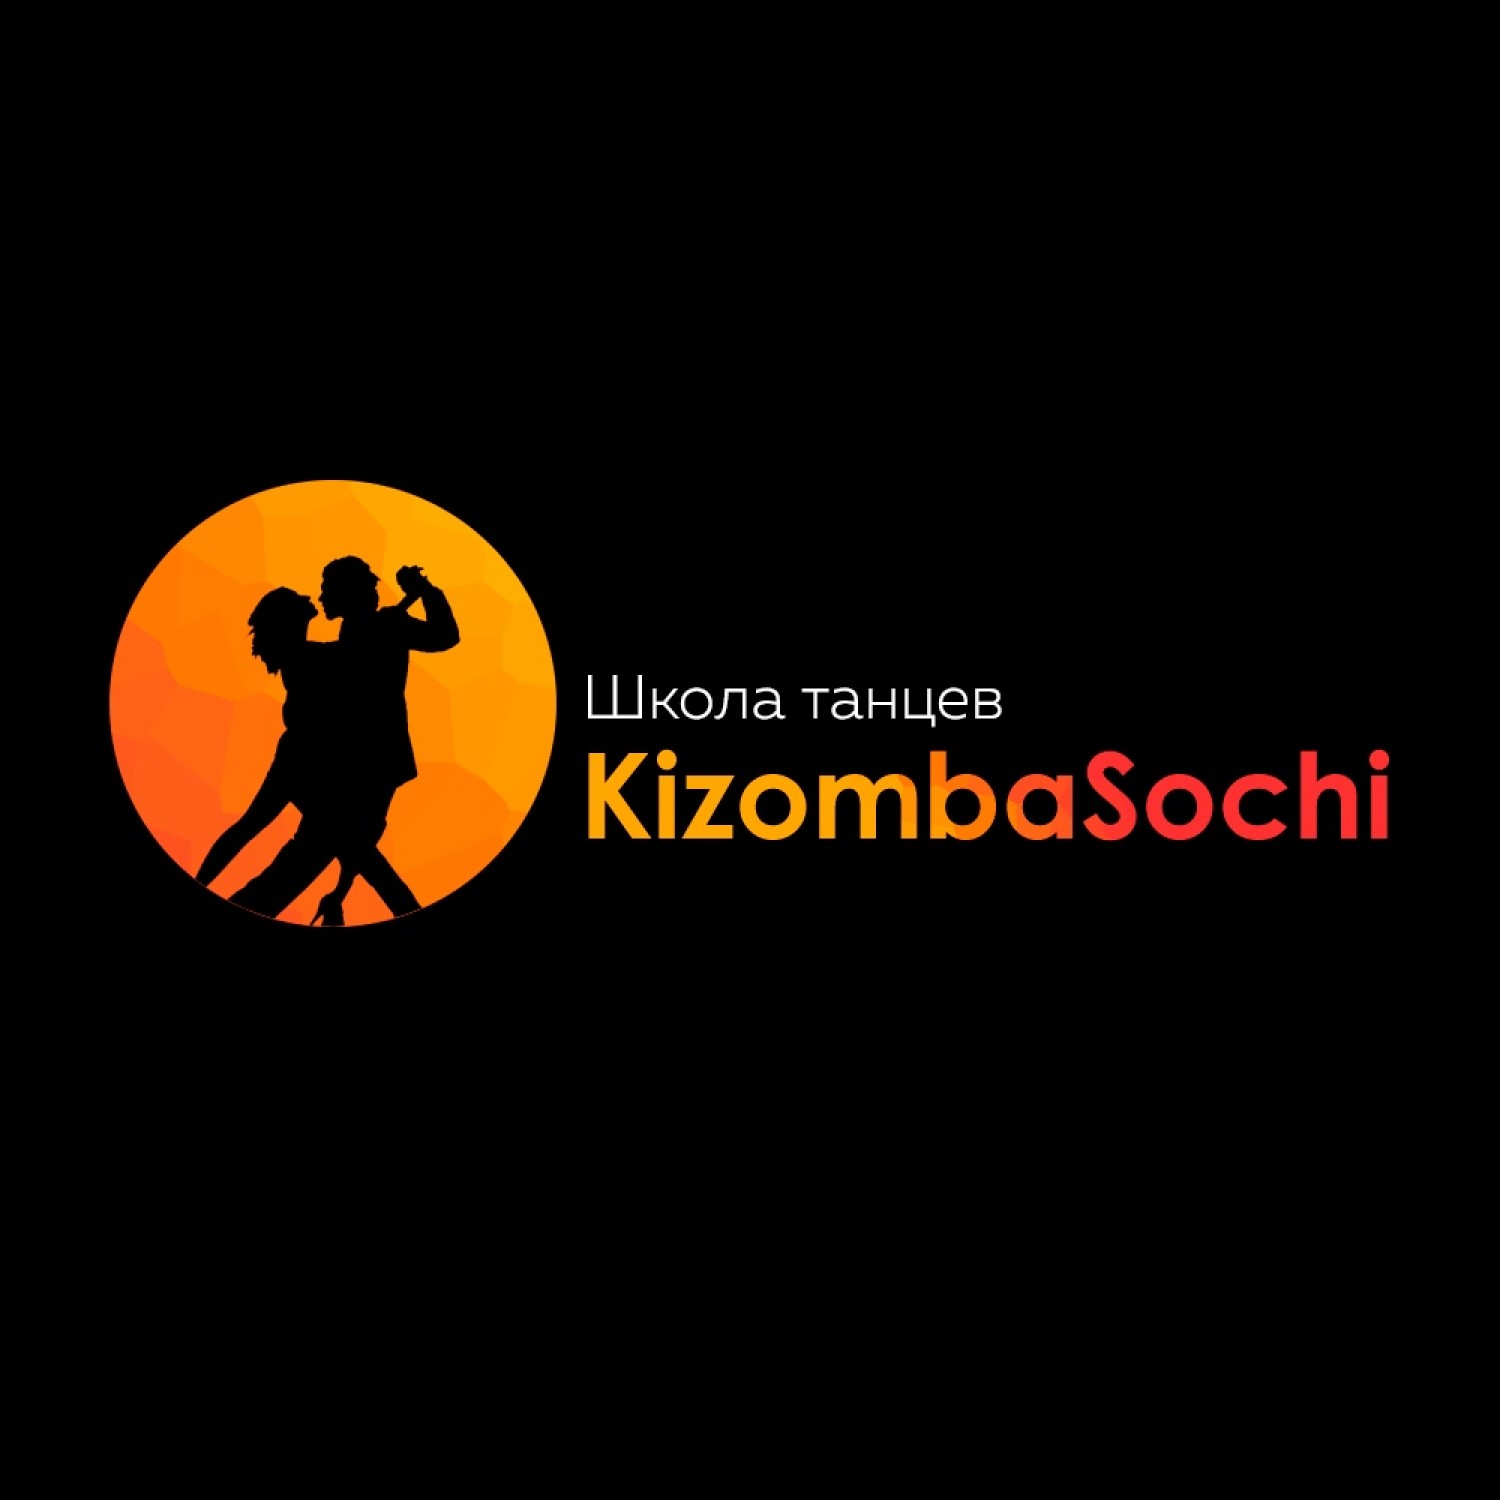 Школа танцев "KizombaSochi"